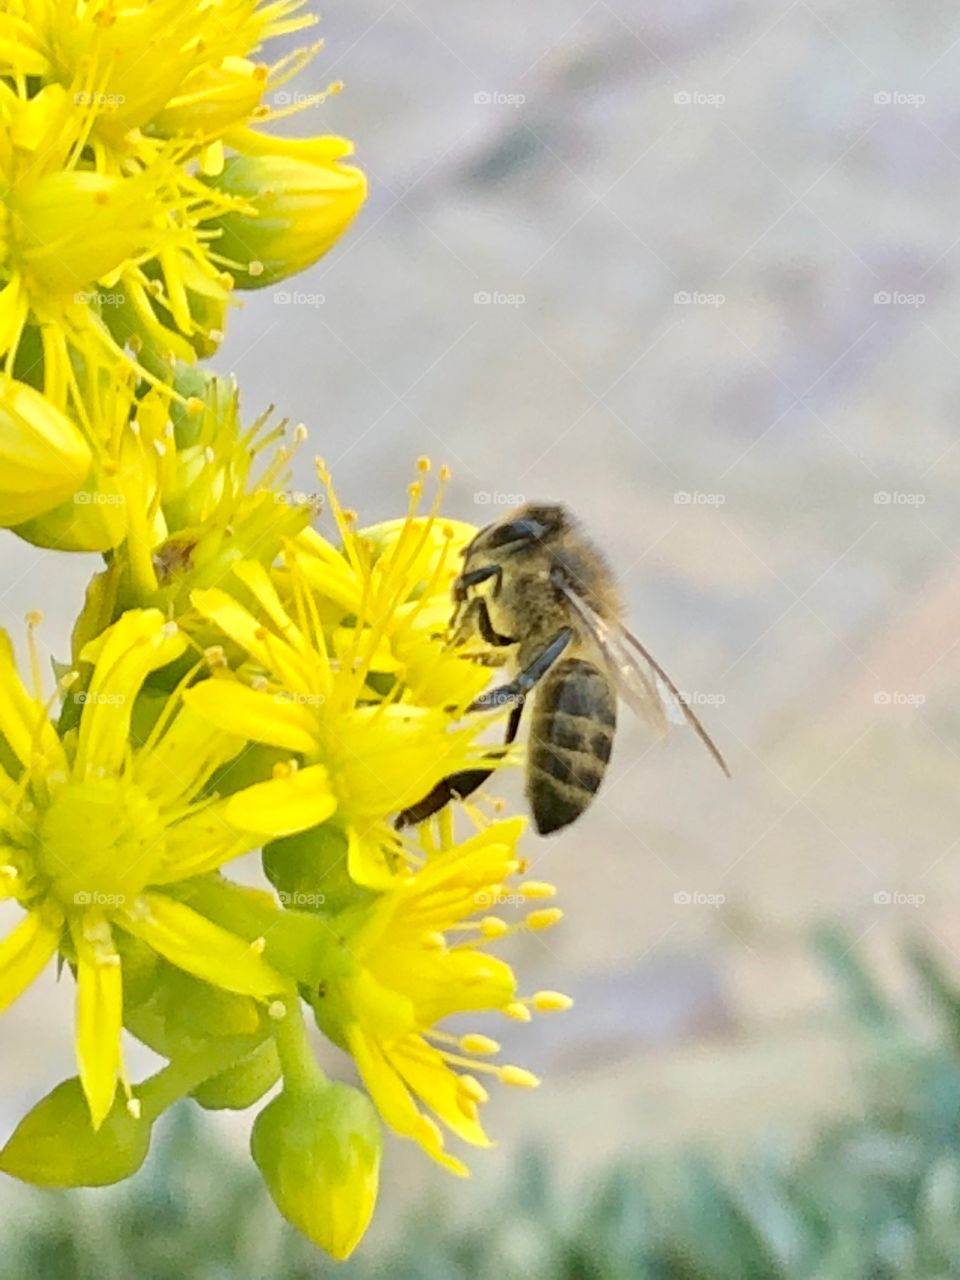 Honey by bee